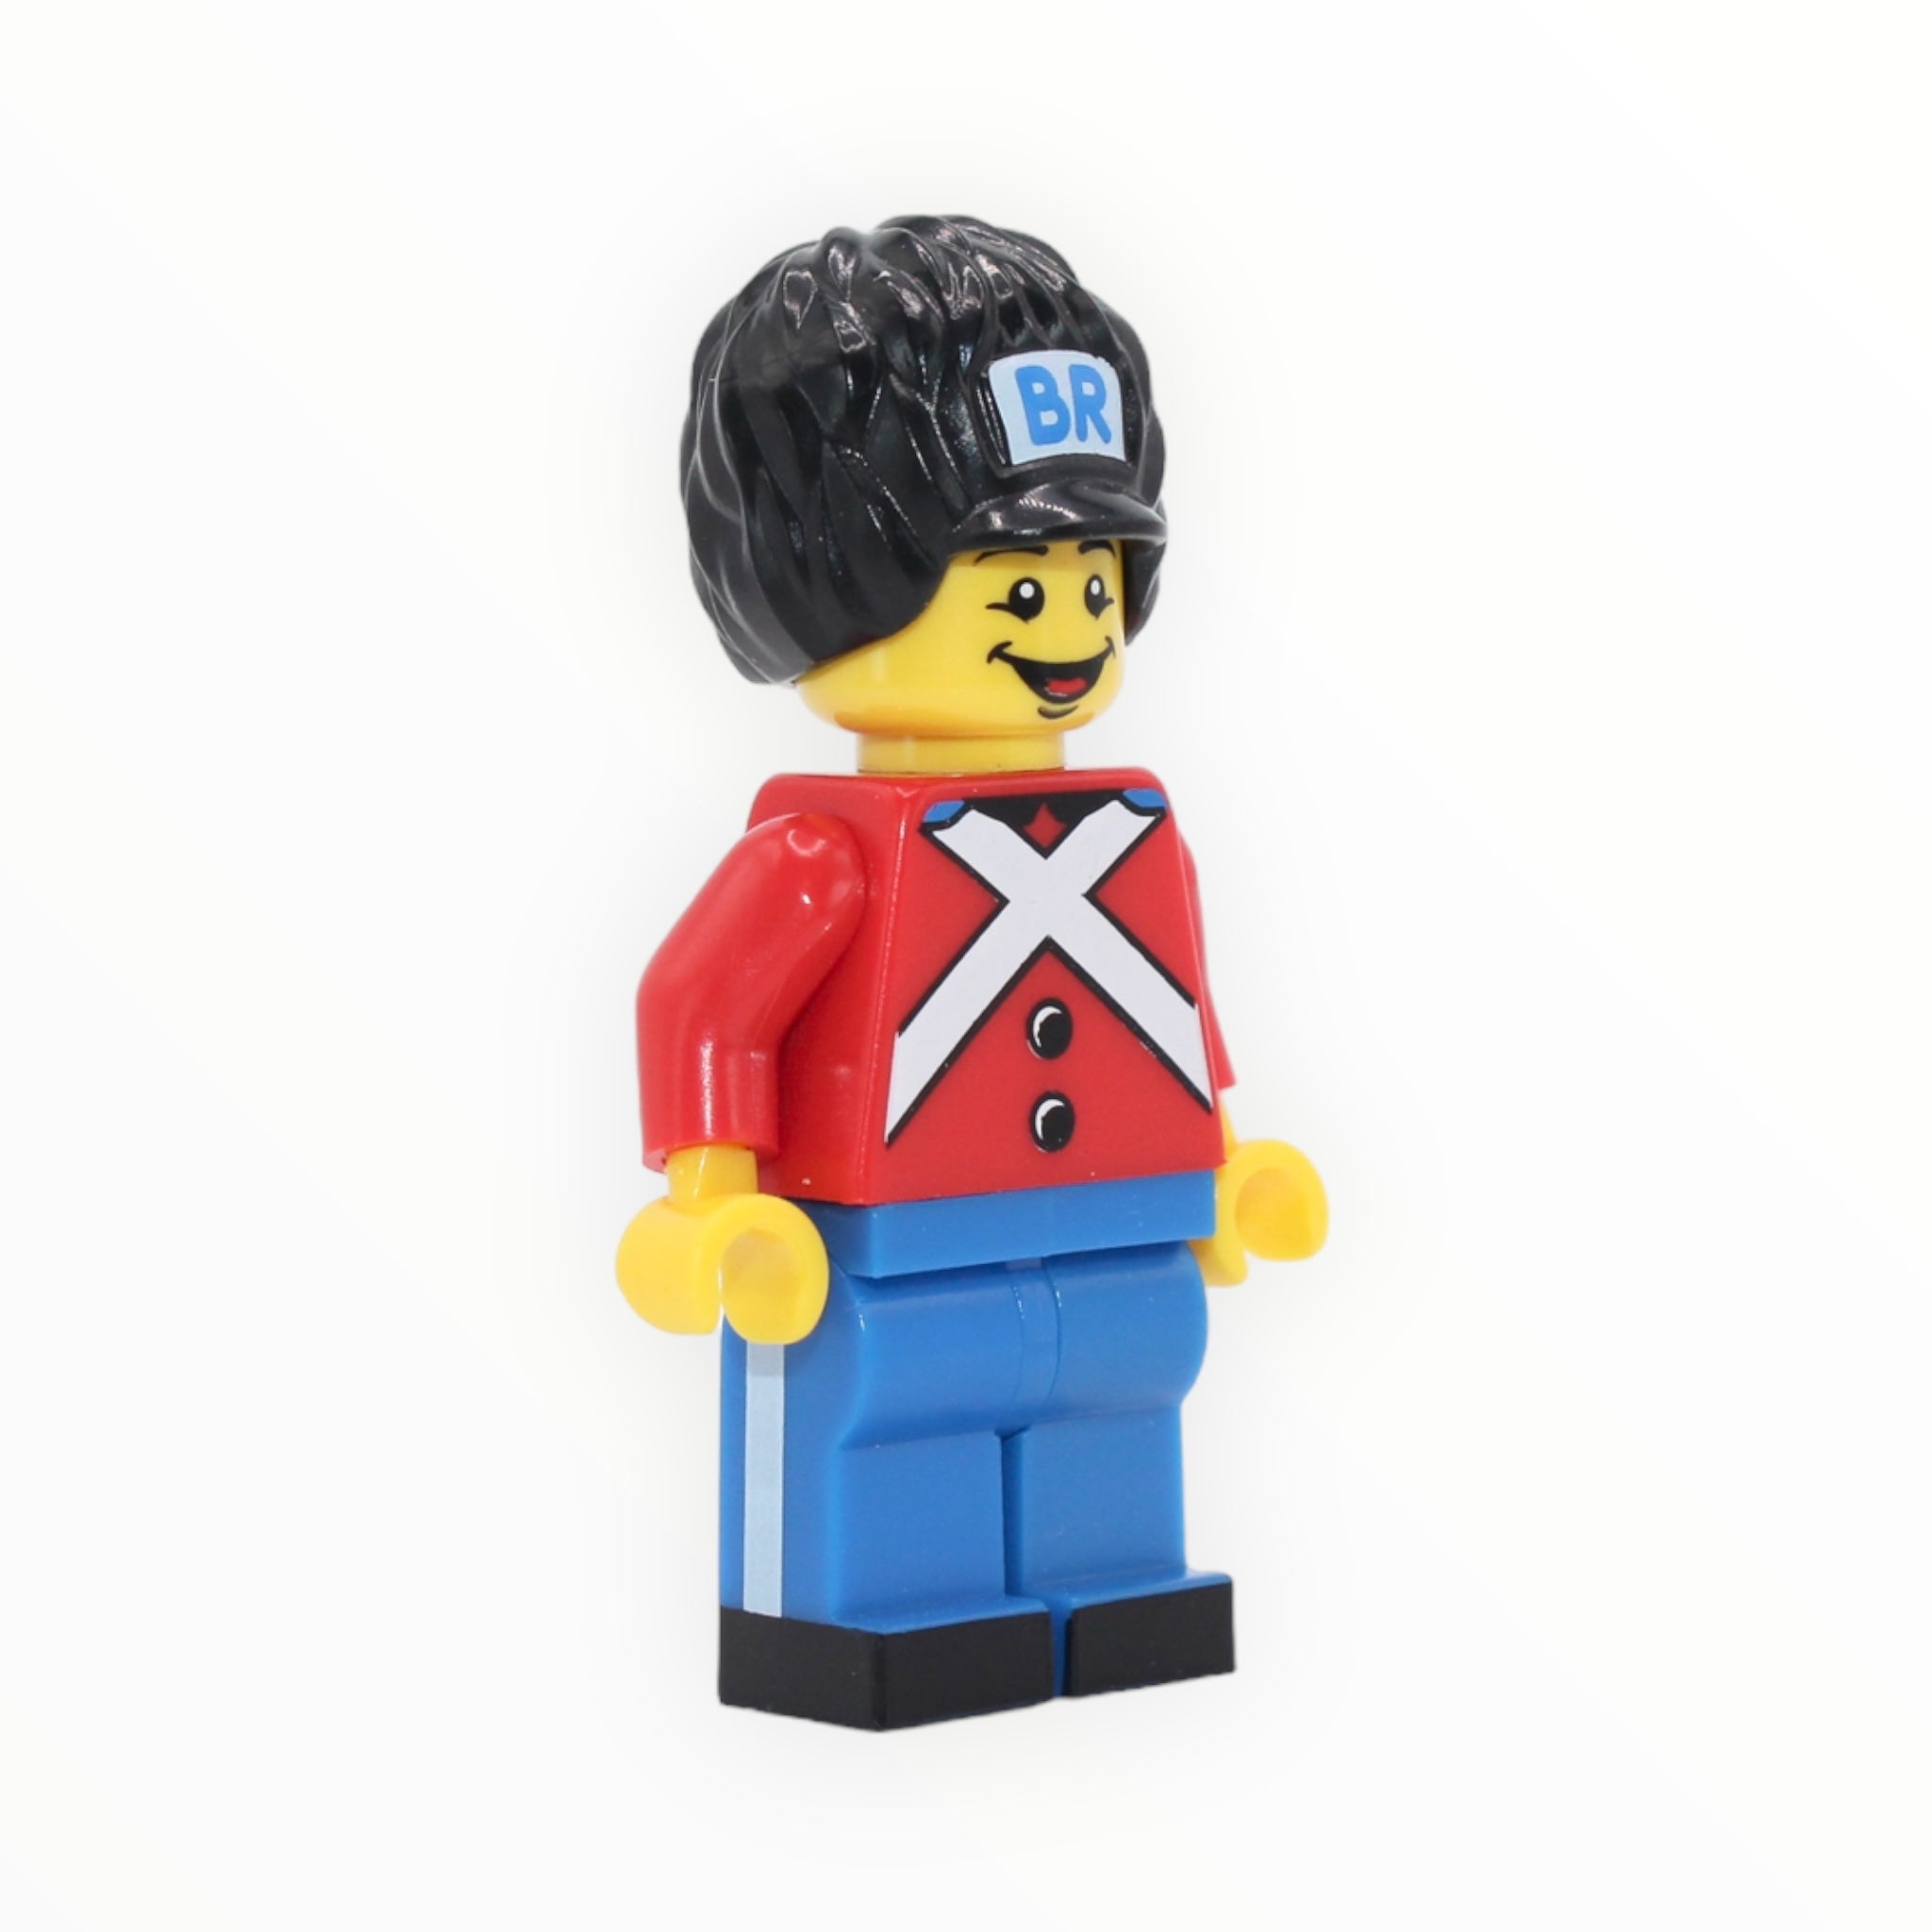 BR LEGO Minifigure (2013)